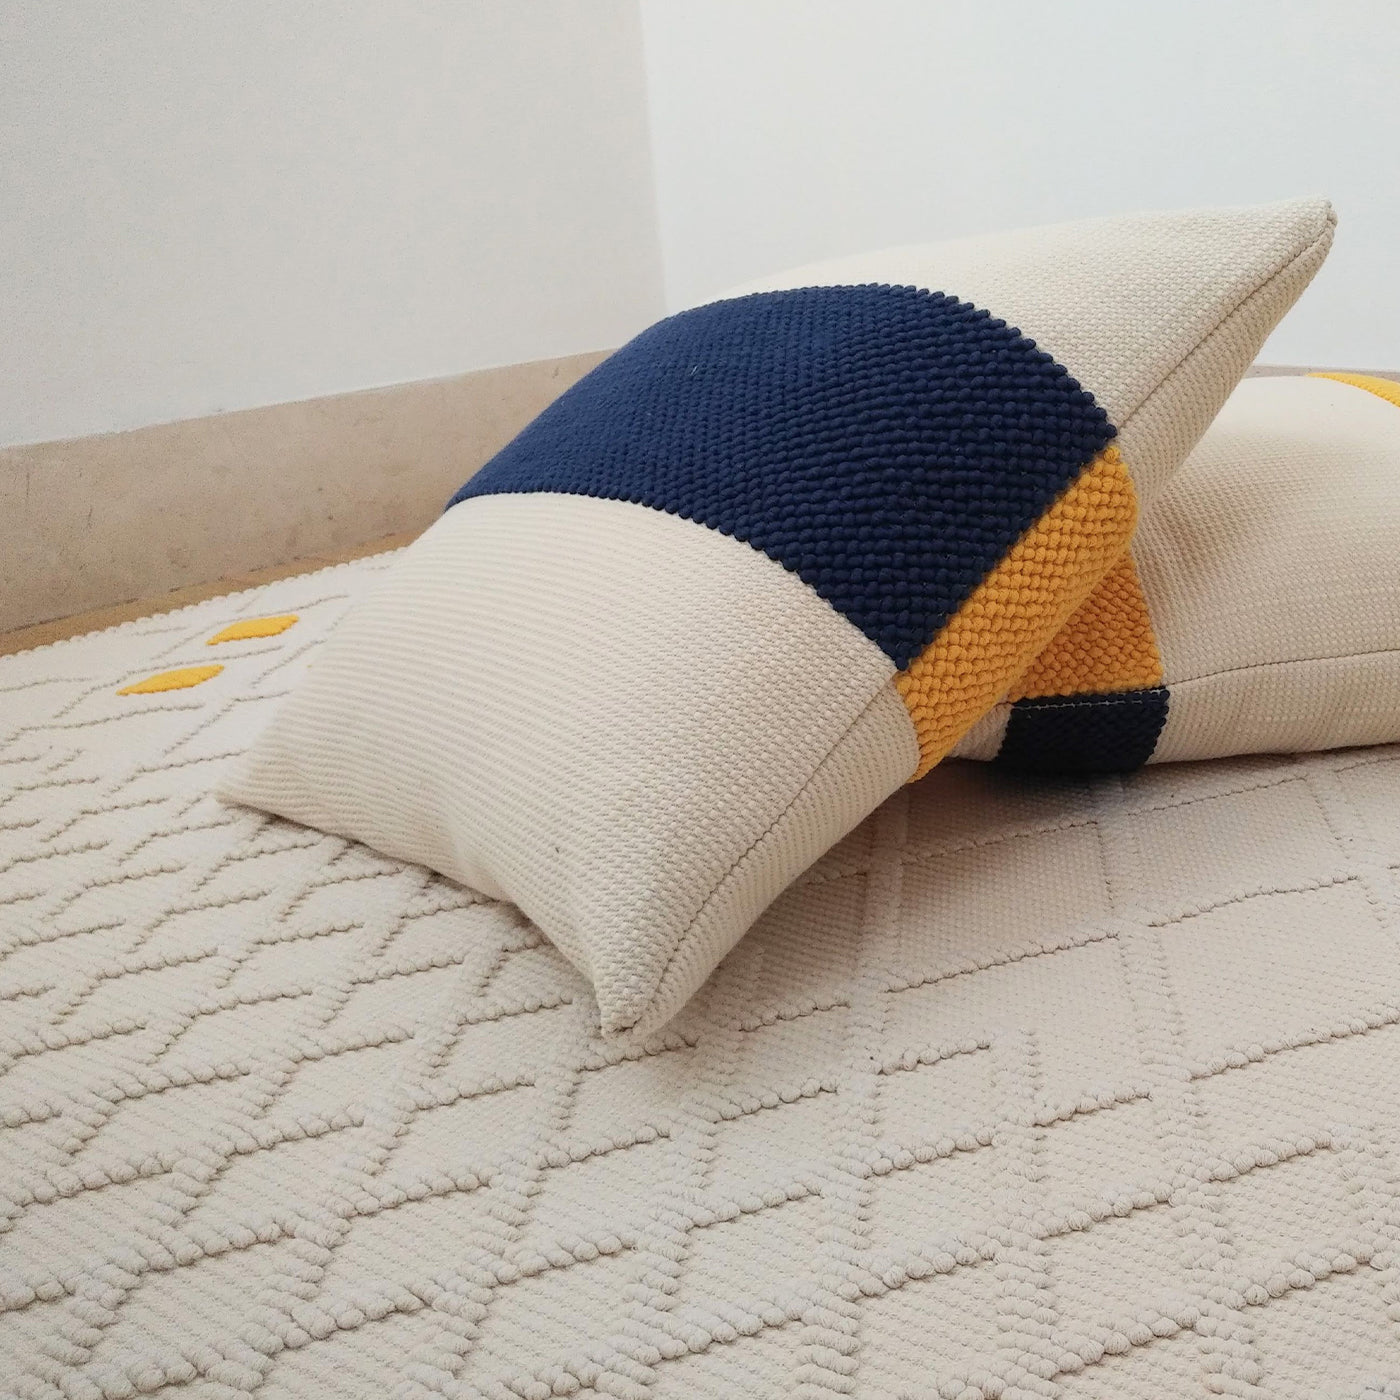 Ecru, Blue, and Yellow Cushion - Alternative view 2